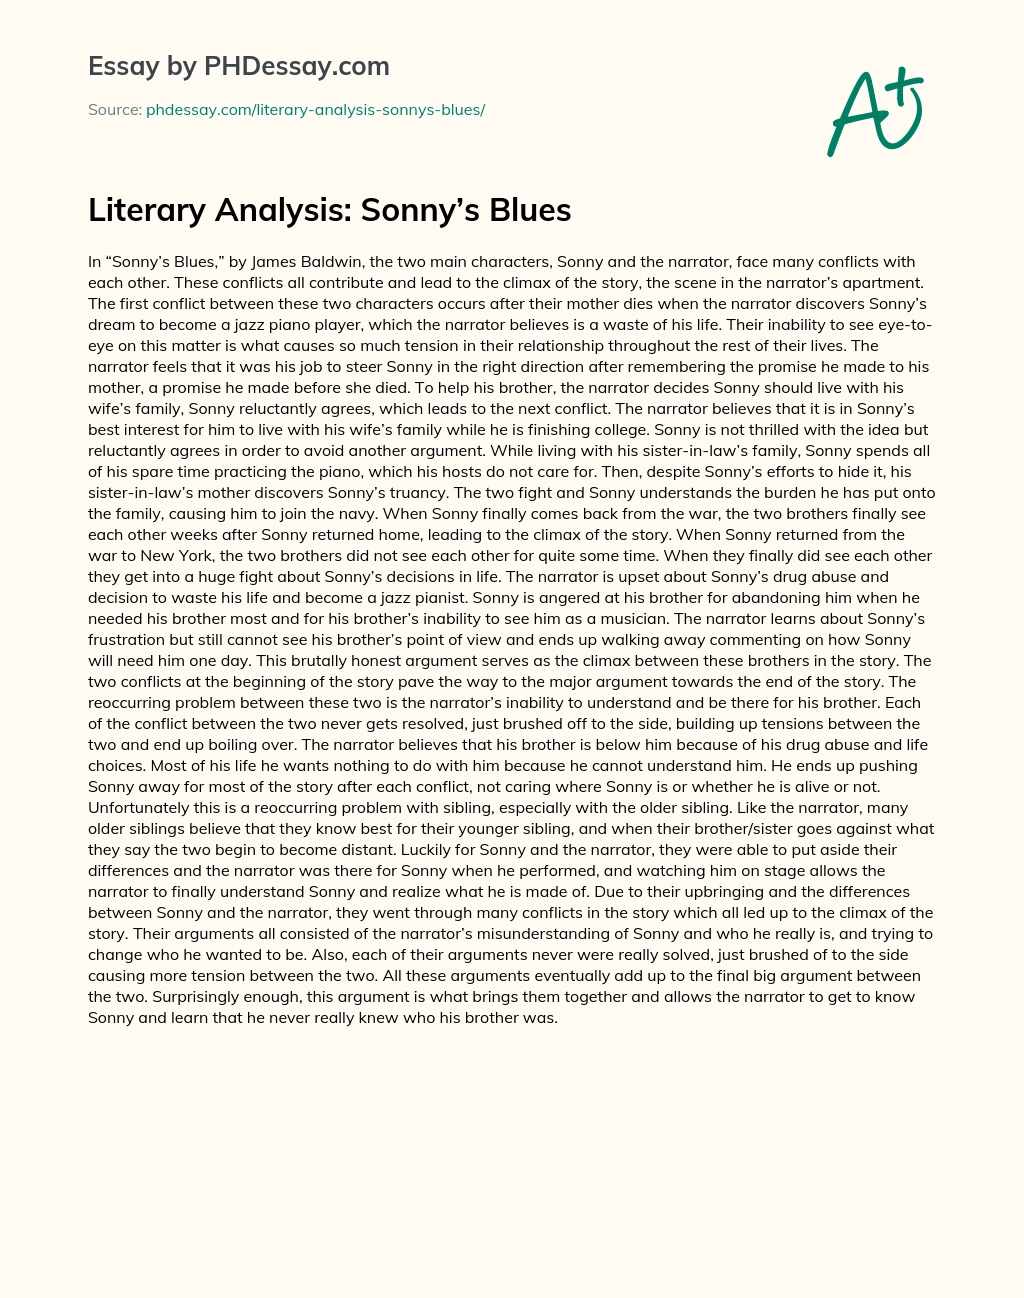 Literary Analysis: Sonny’s Blues essay